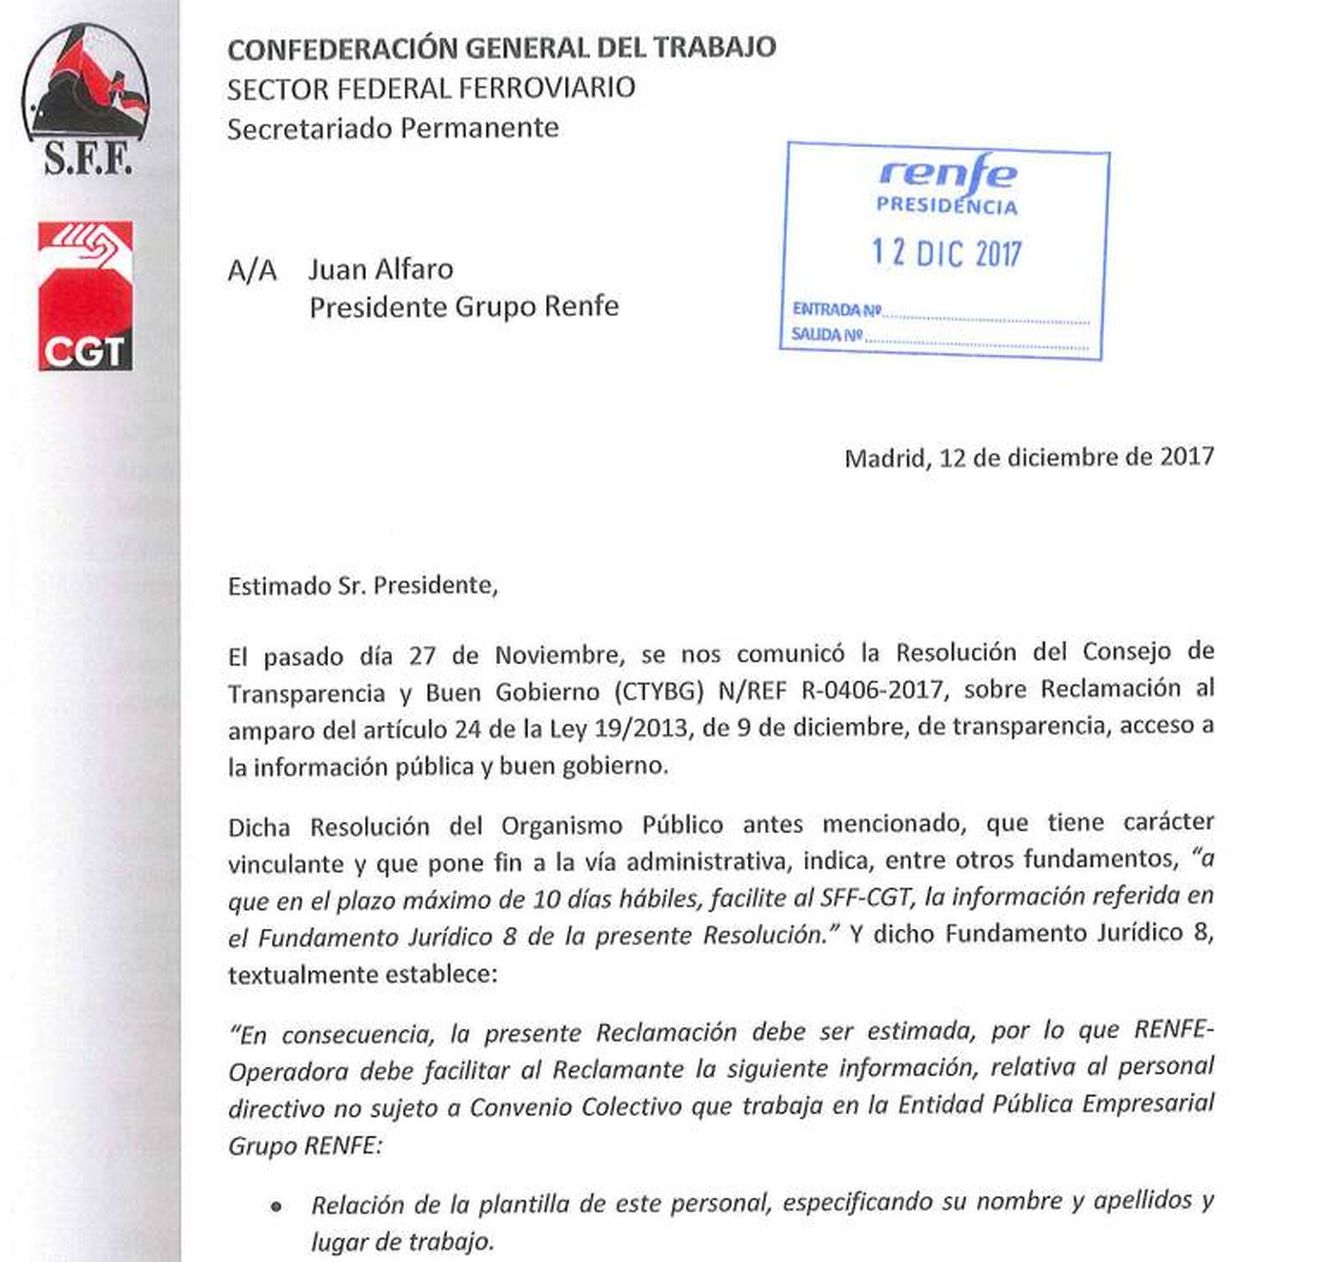 Carta remitida al presidente de Renfe-Operadora, Juan Alfaro.